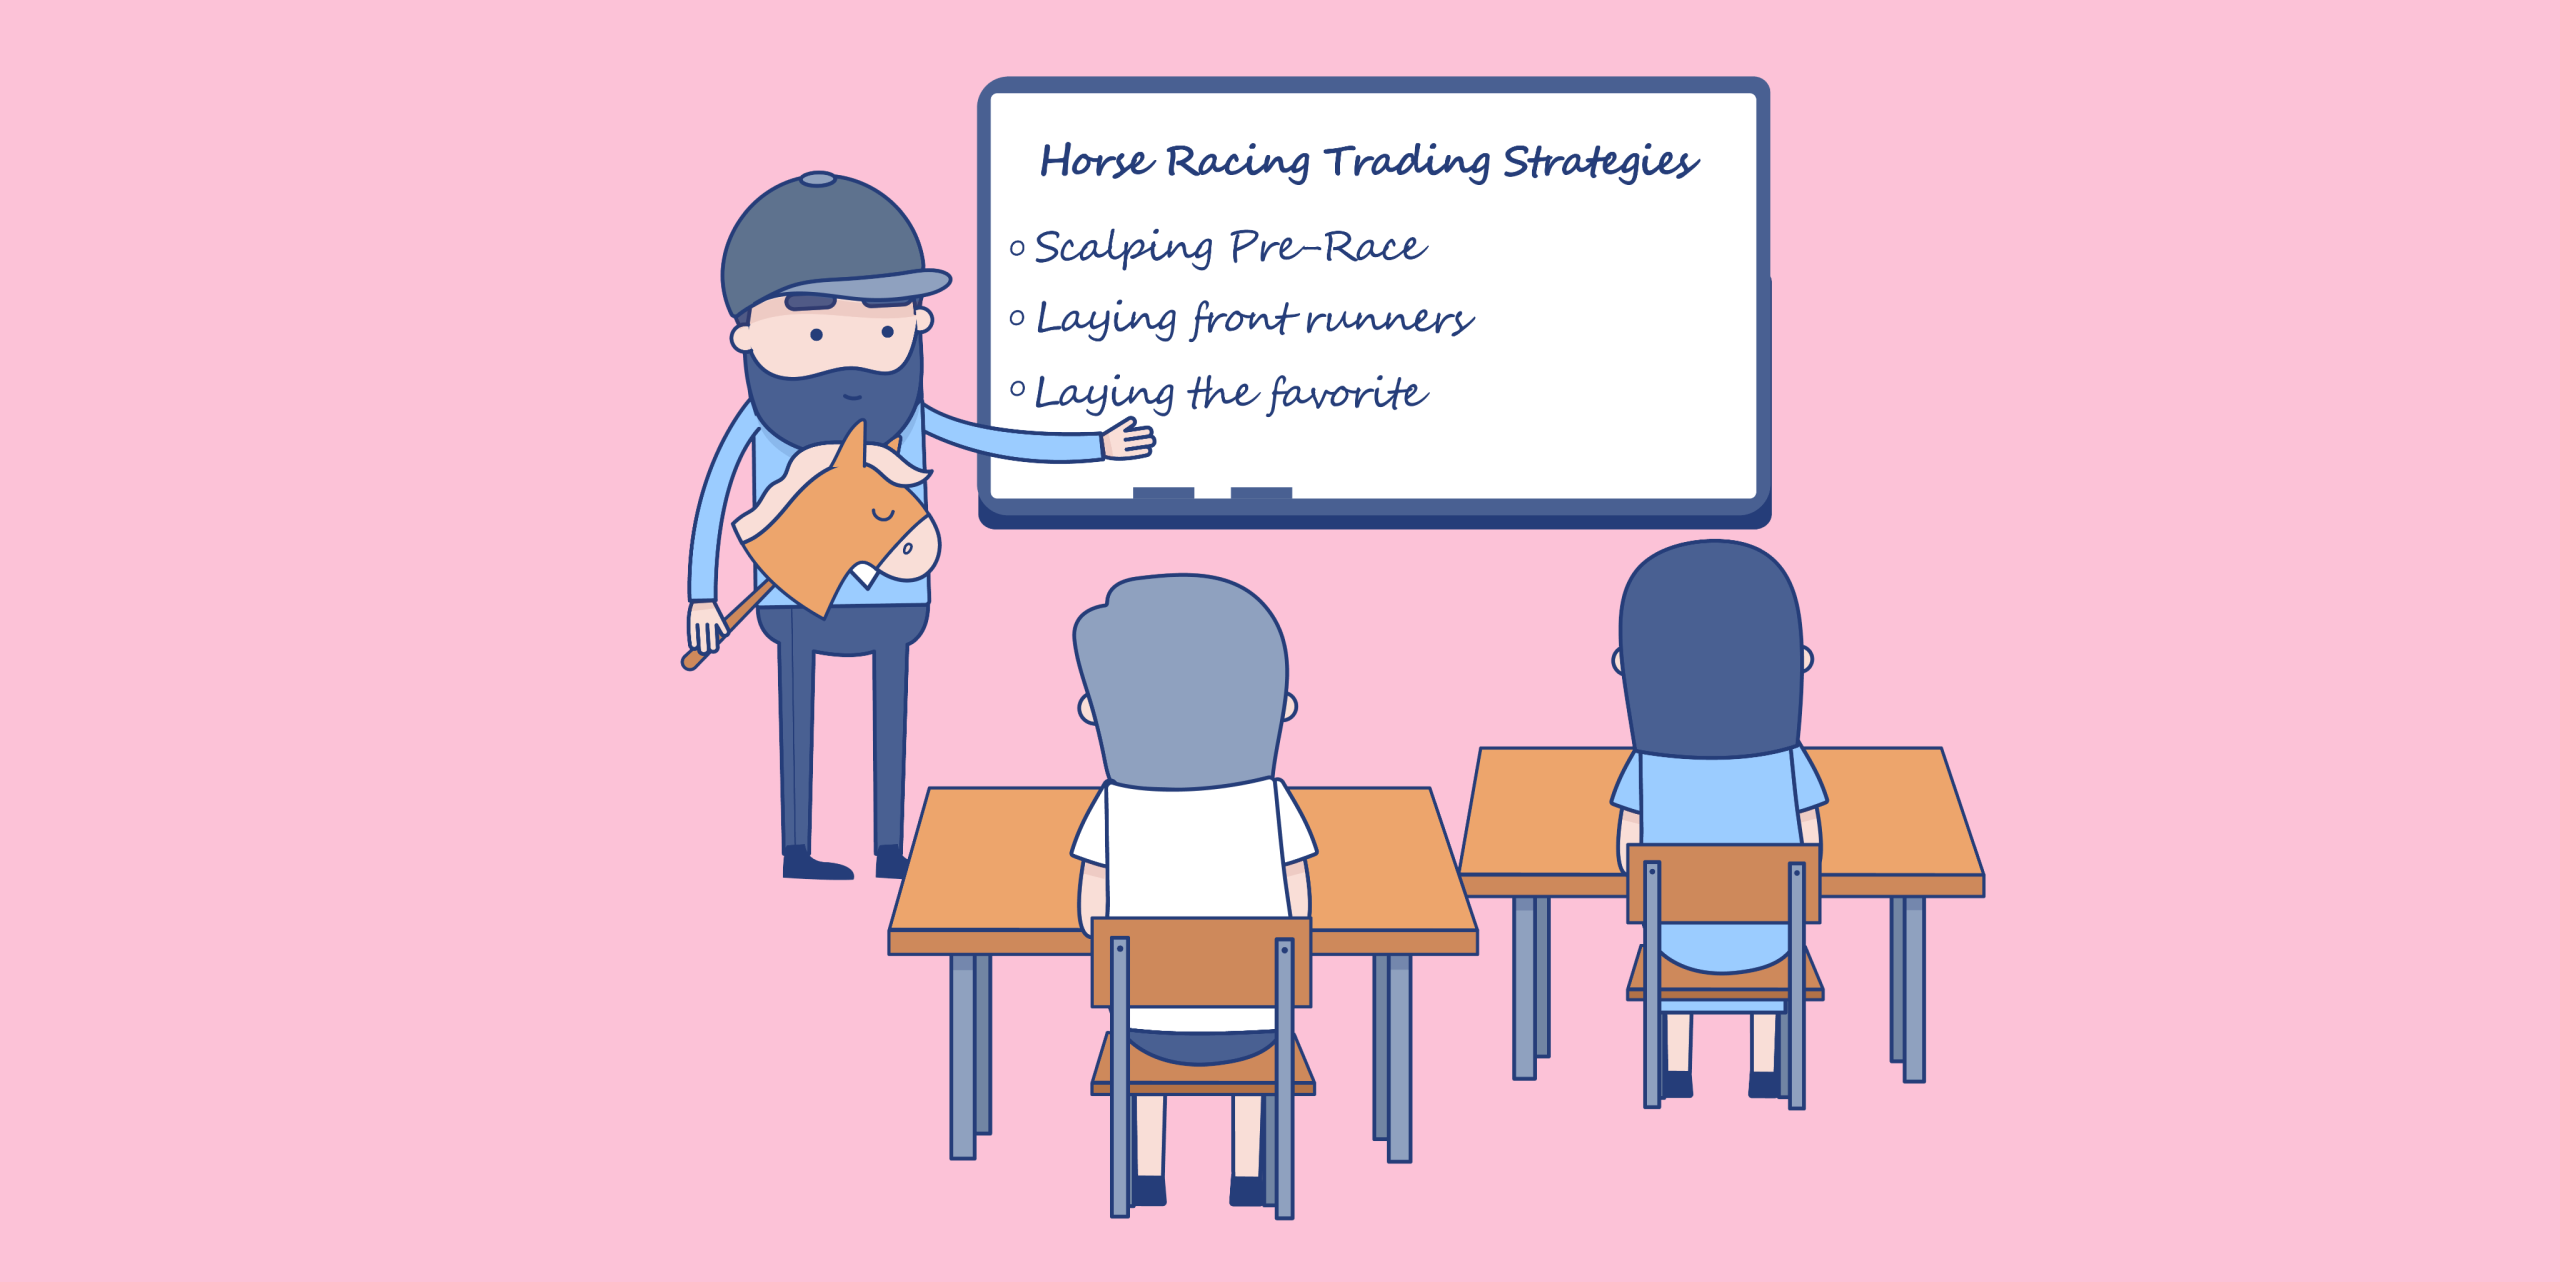 Horse Racing Trading Strategies